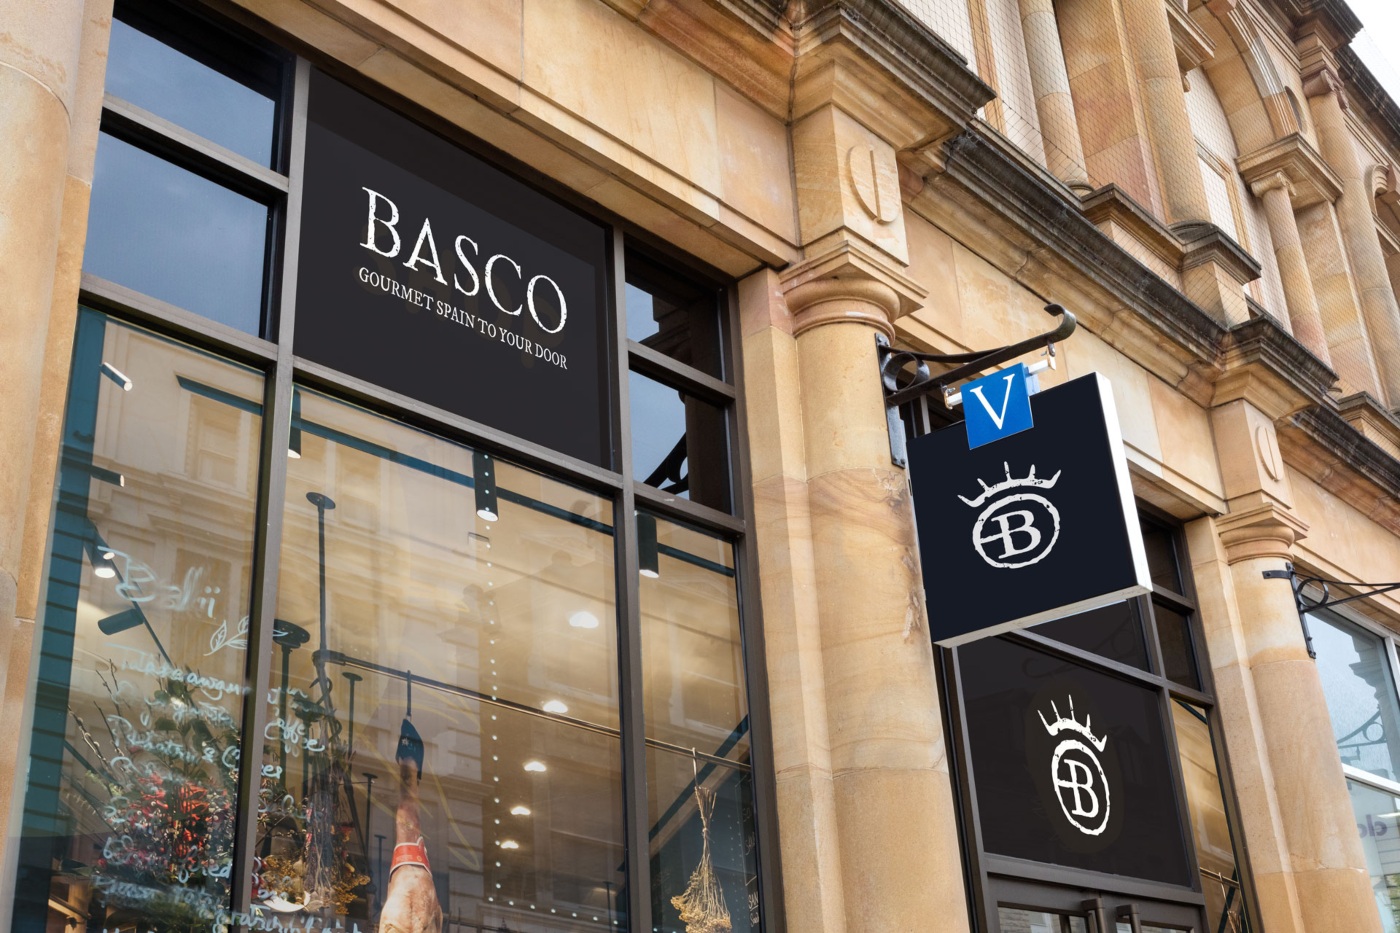 Basco Opens Pop-Up Deli Harrogate